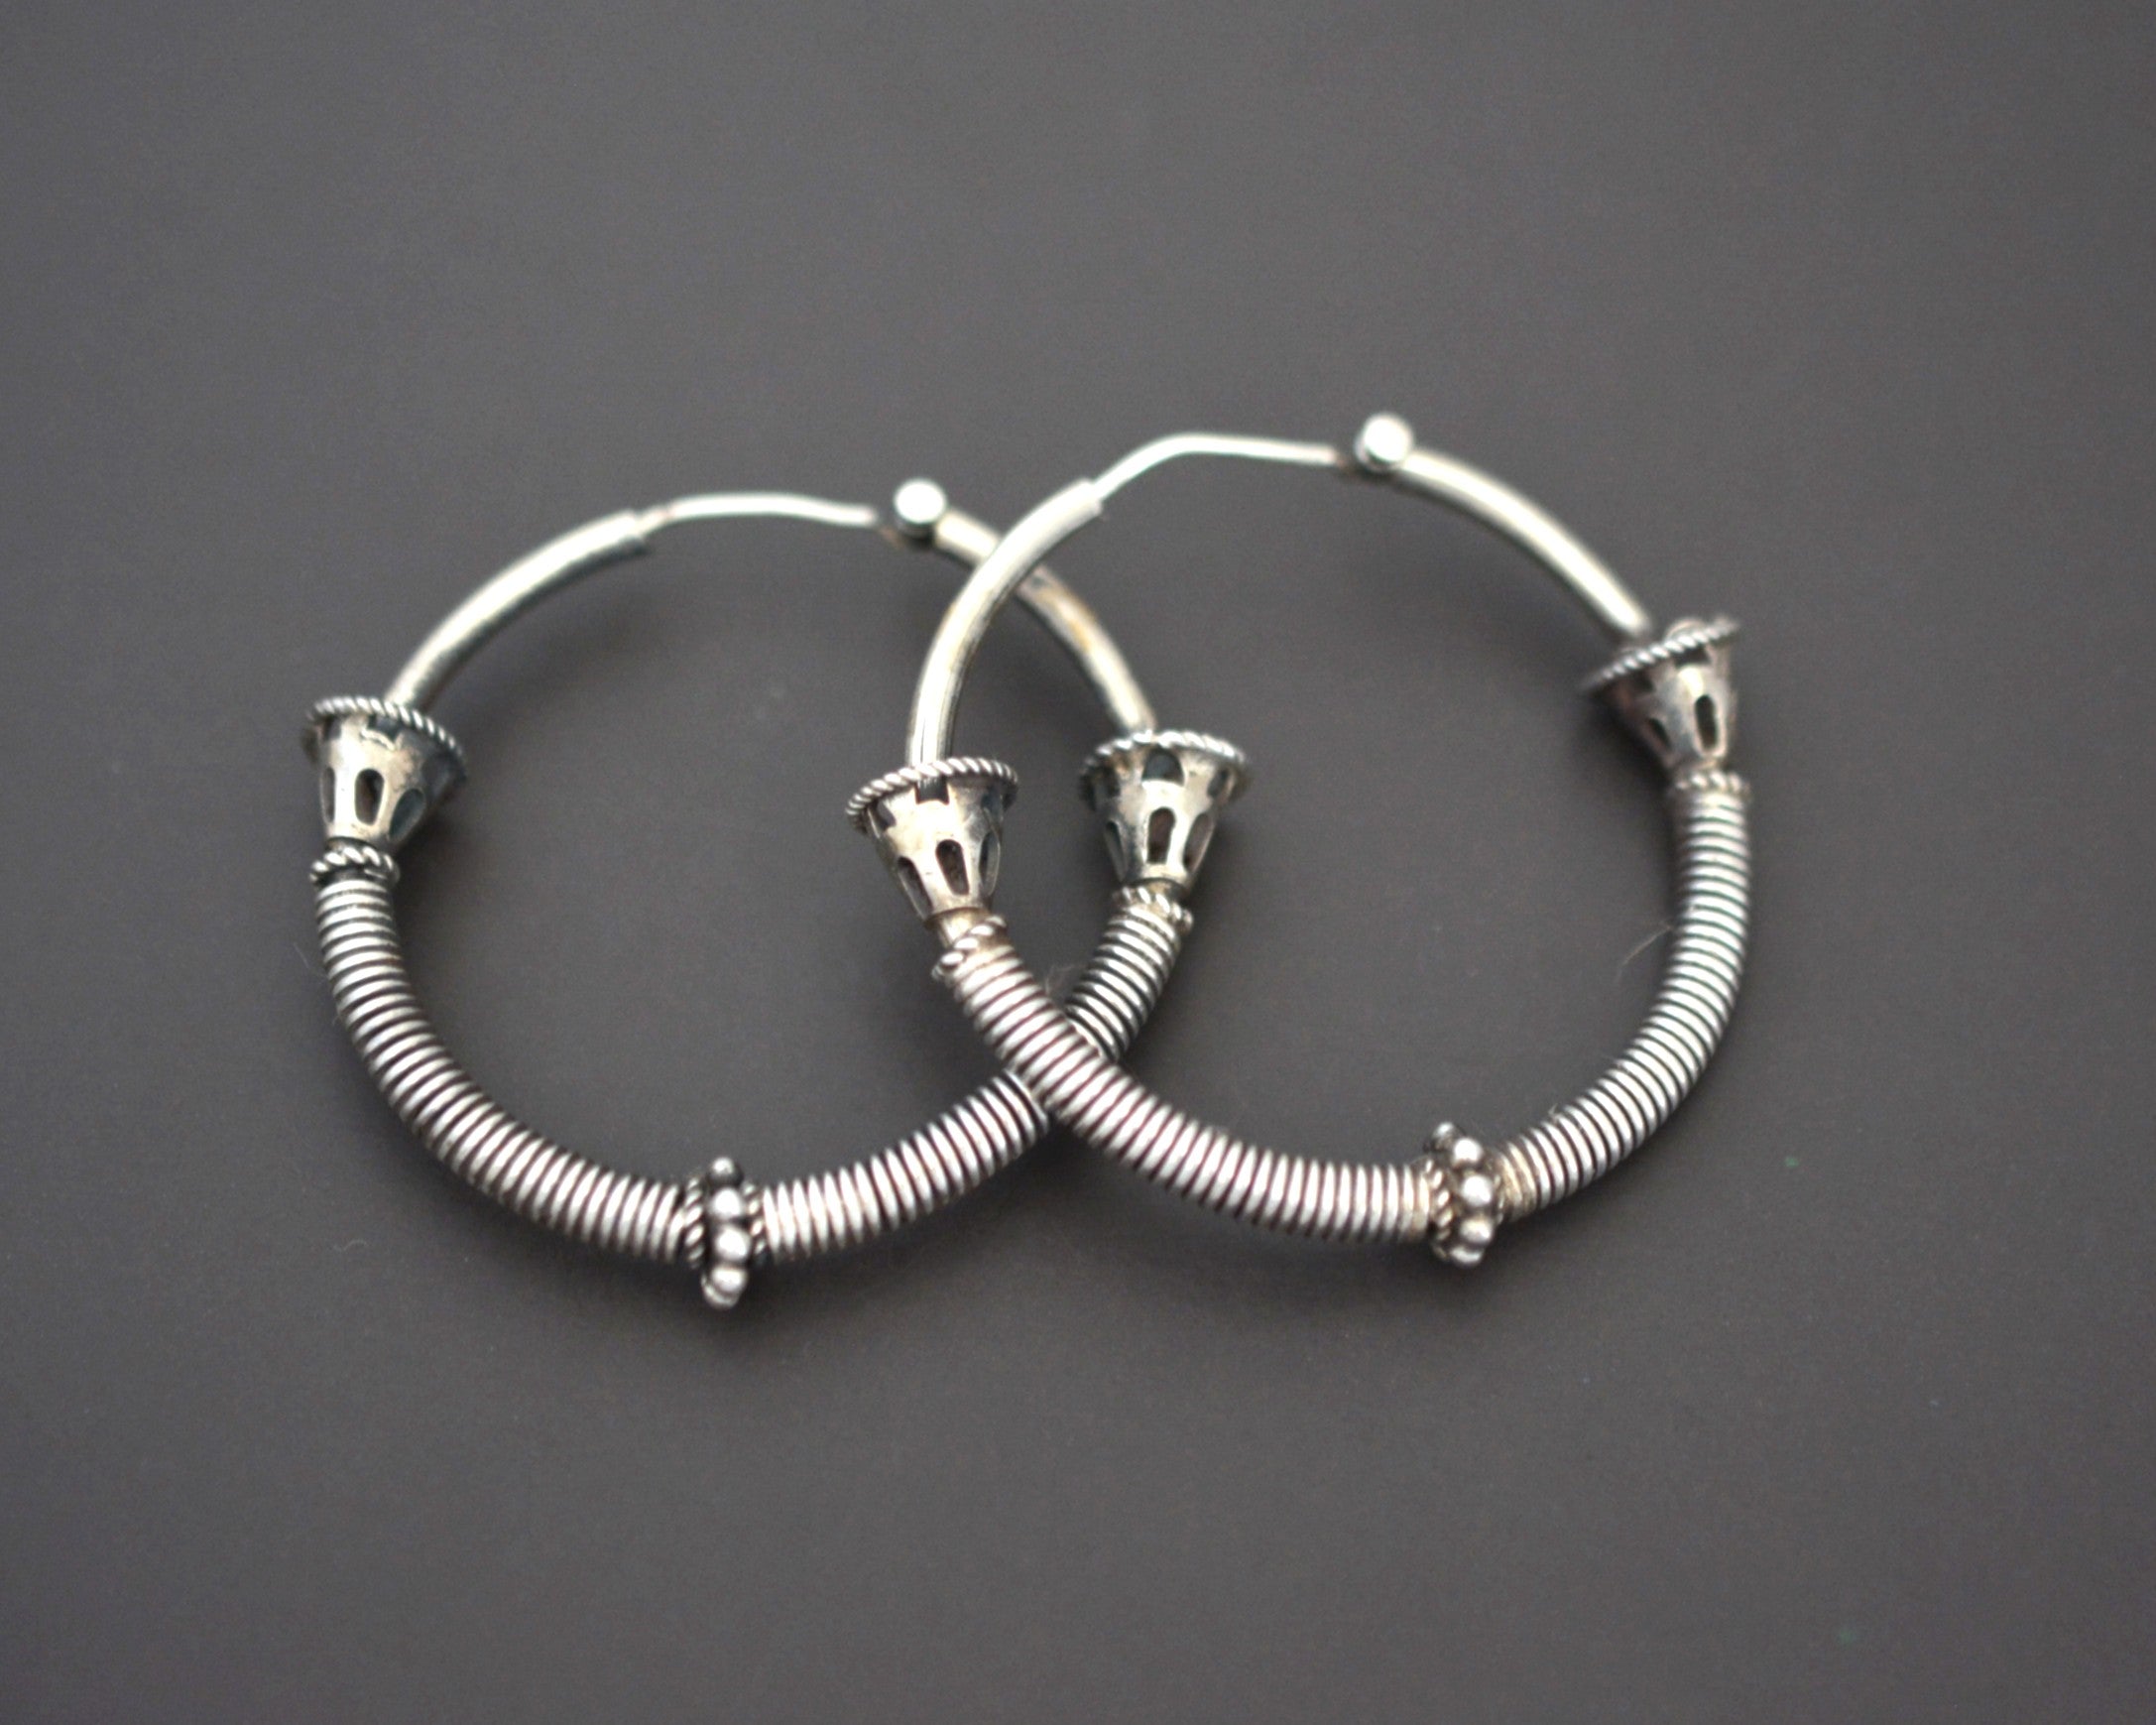 Ethnic Bali Hoop Earrings with Wire - Medium/Large